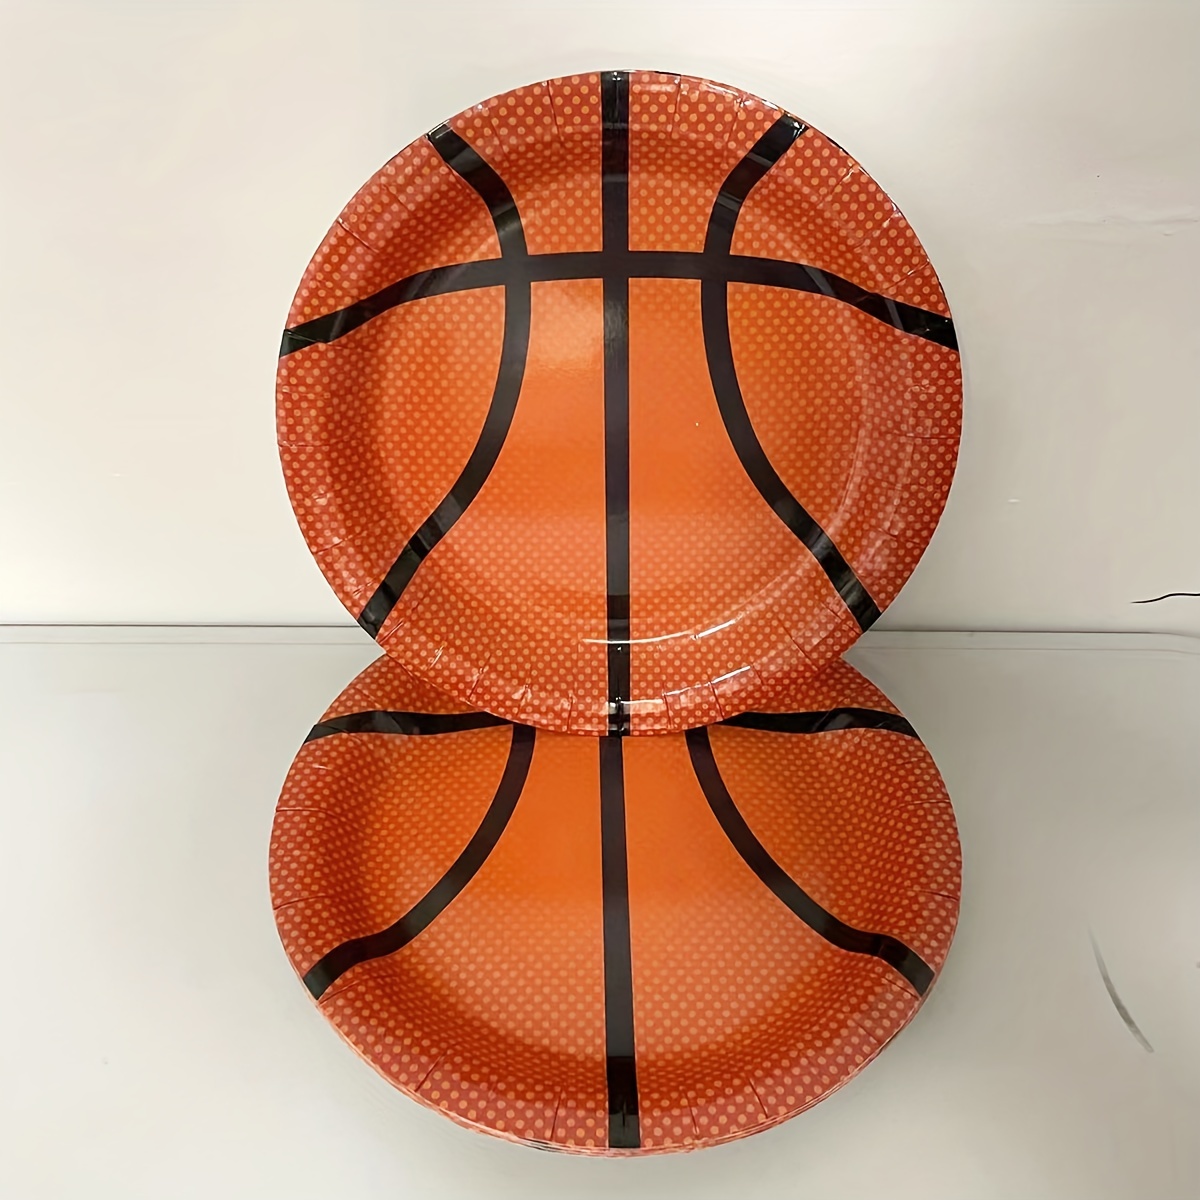 20PCS PVC Straw Charms Sports Series Basketball Football Reusable